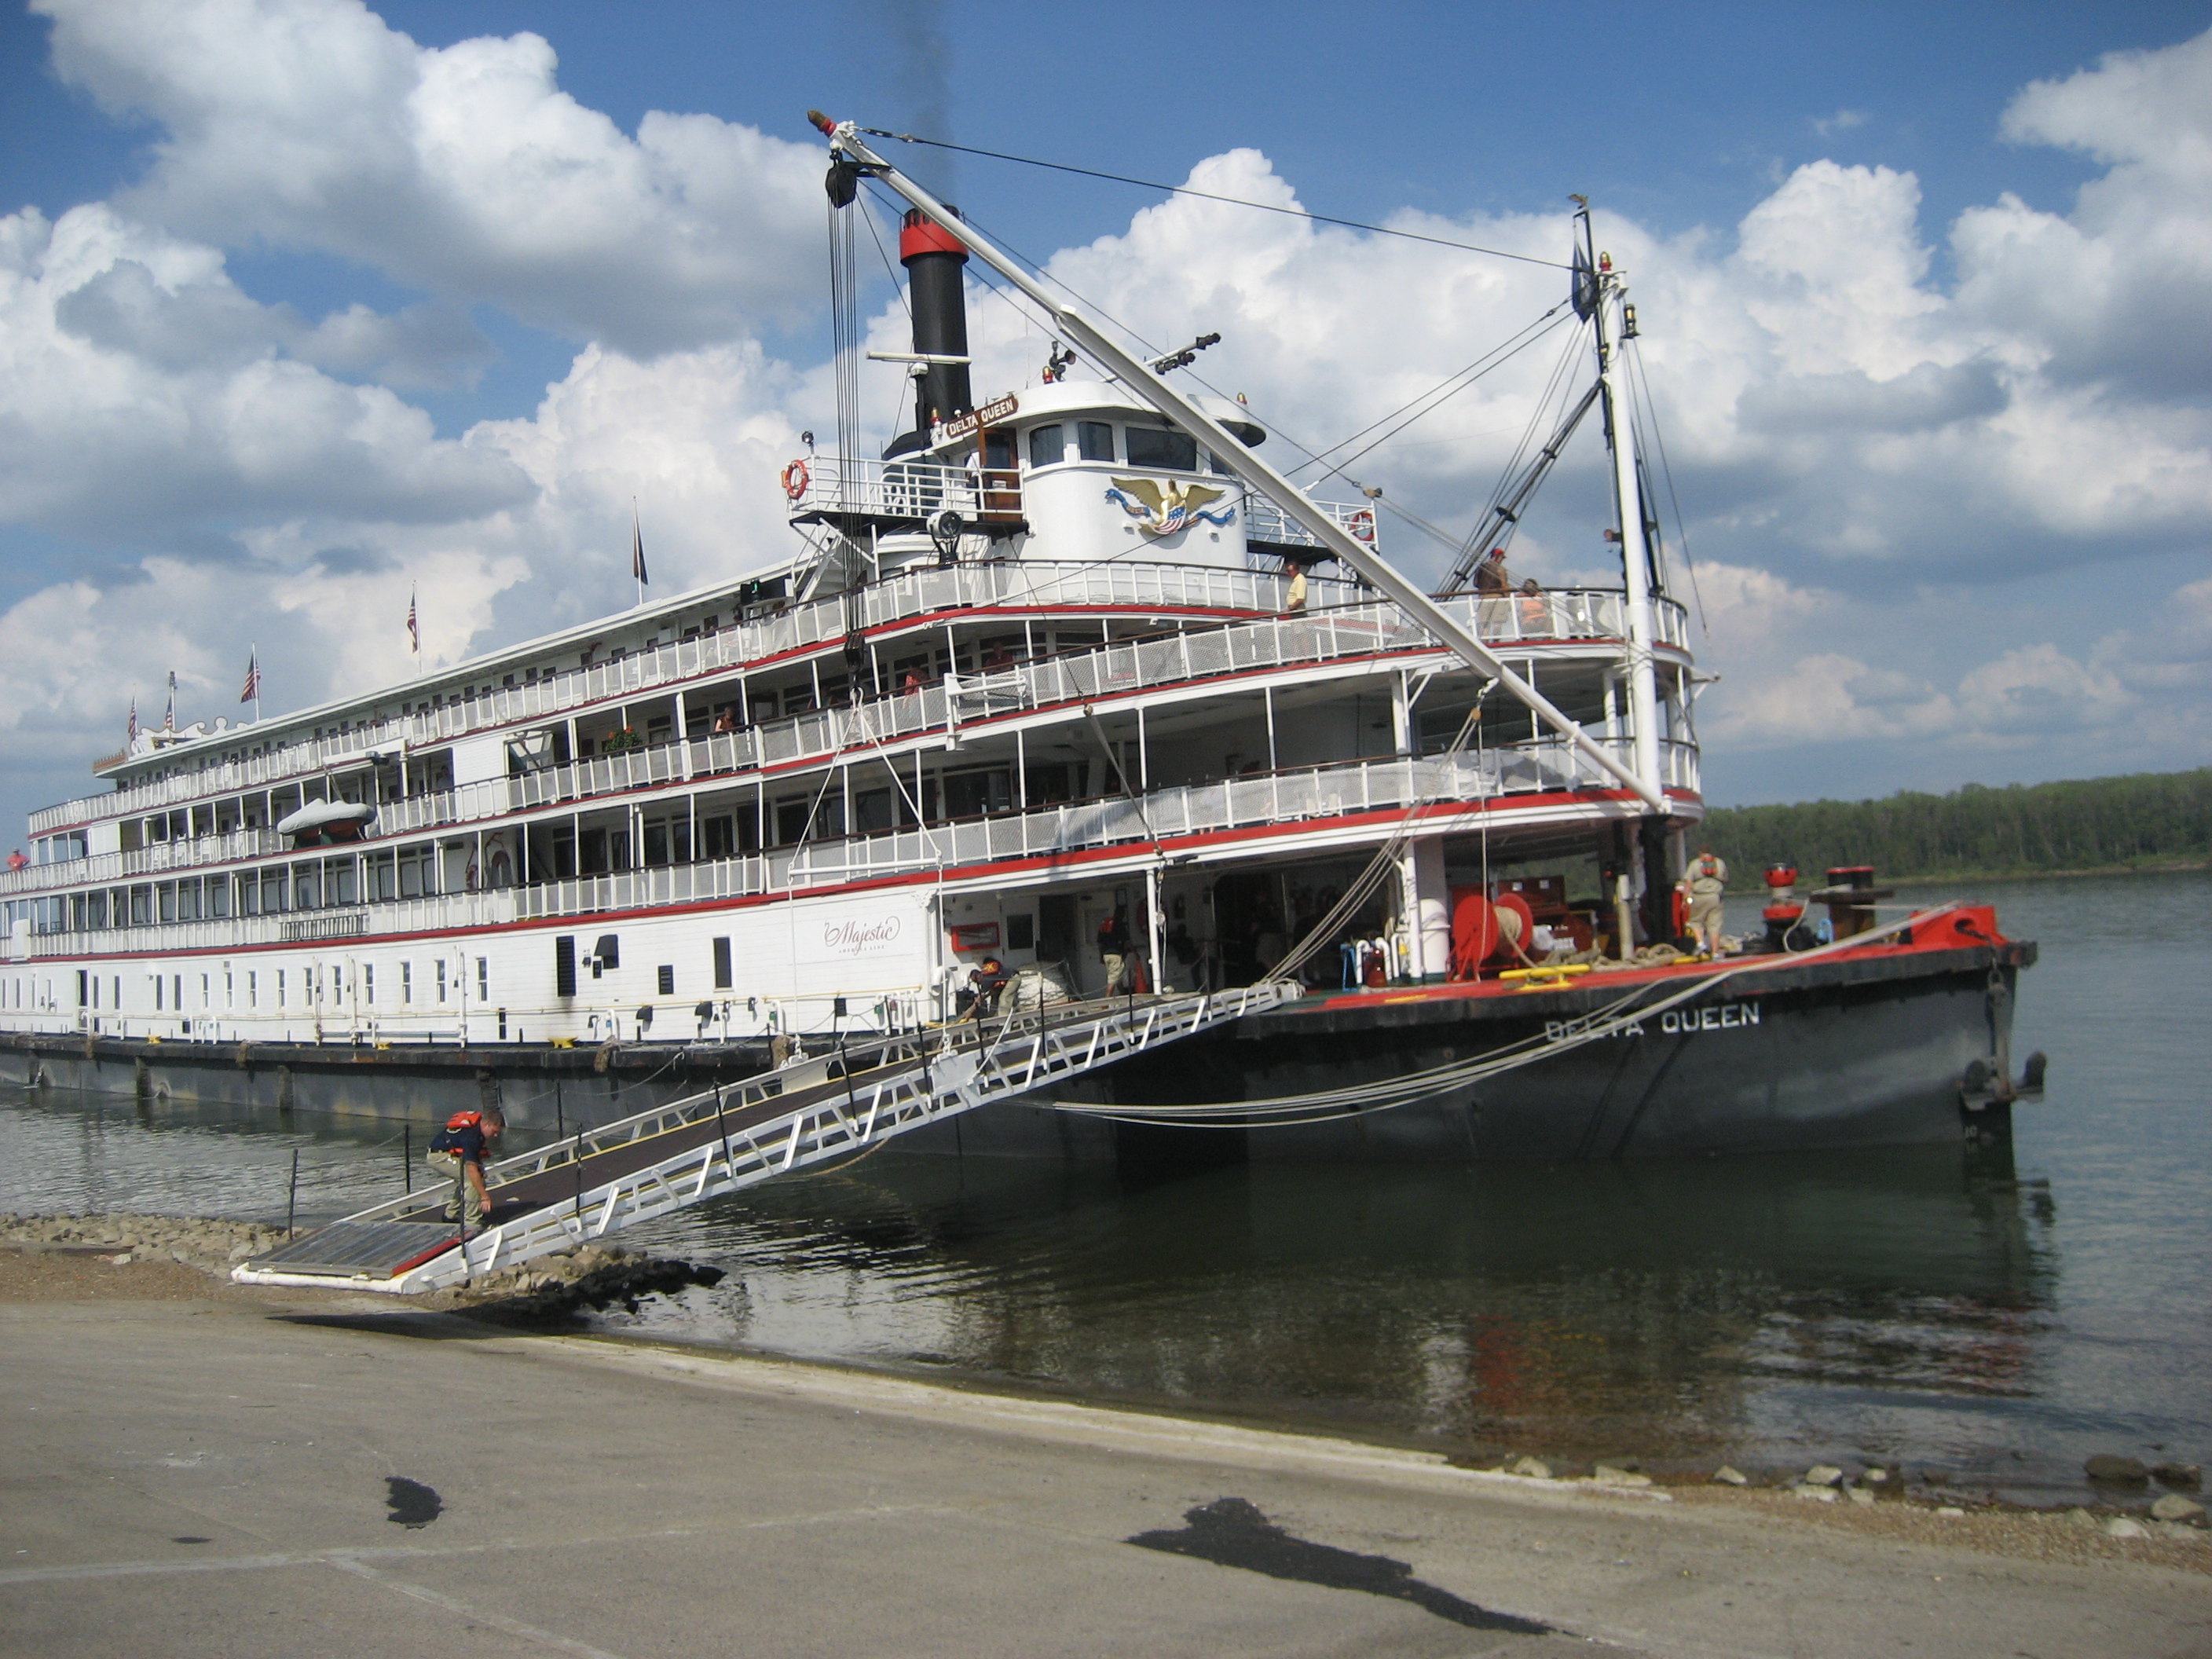 Поиск парохода. Delta Queen пароход. Речной пароход Миссисипи. Mississippi Queen Steamboat 19 века. Речной флот Миссисипи.